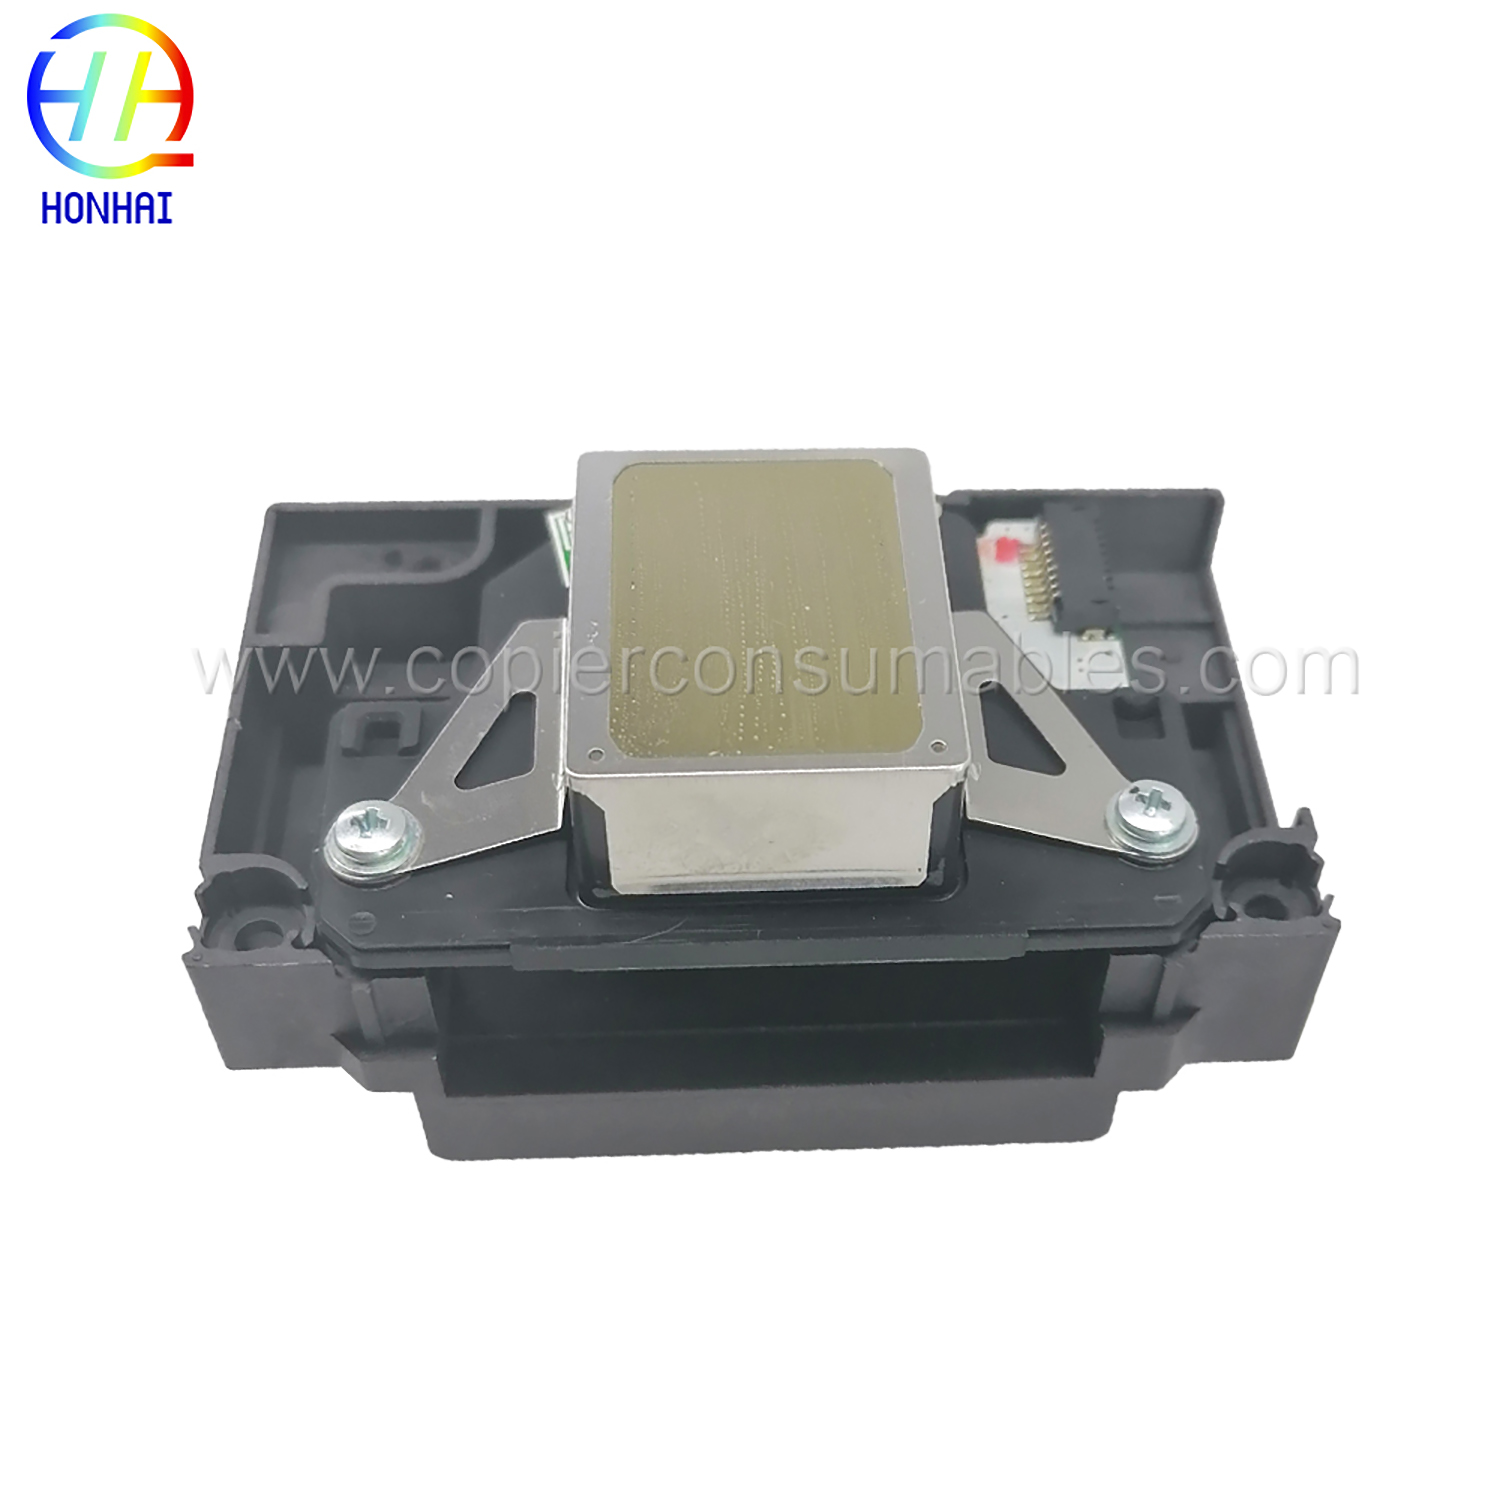 Cabezal de impresión compatible con Epson L1800 1410 1430 1500W (5) 拷贝